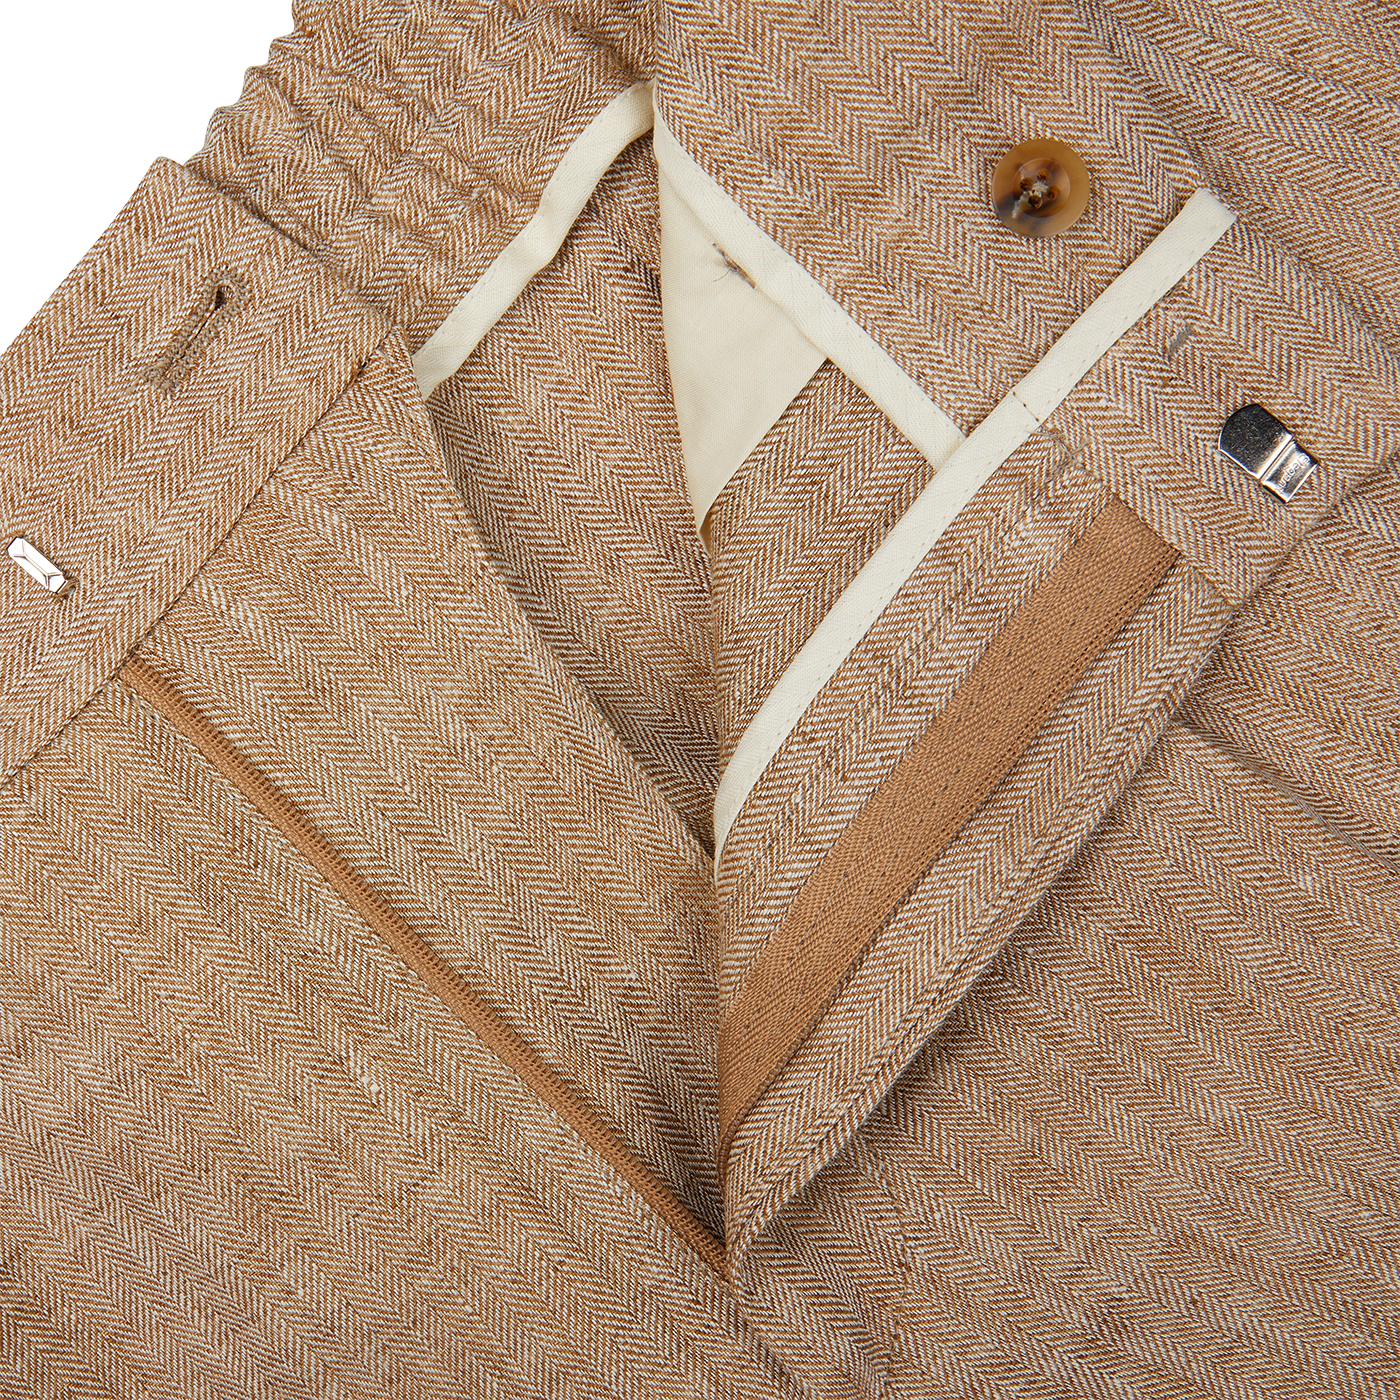 A close up of Berwich's Beige Linen Herringbone Drawstring Trousers.